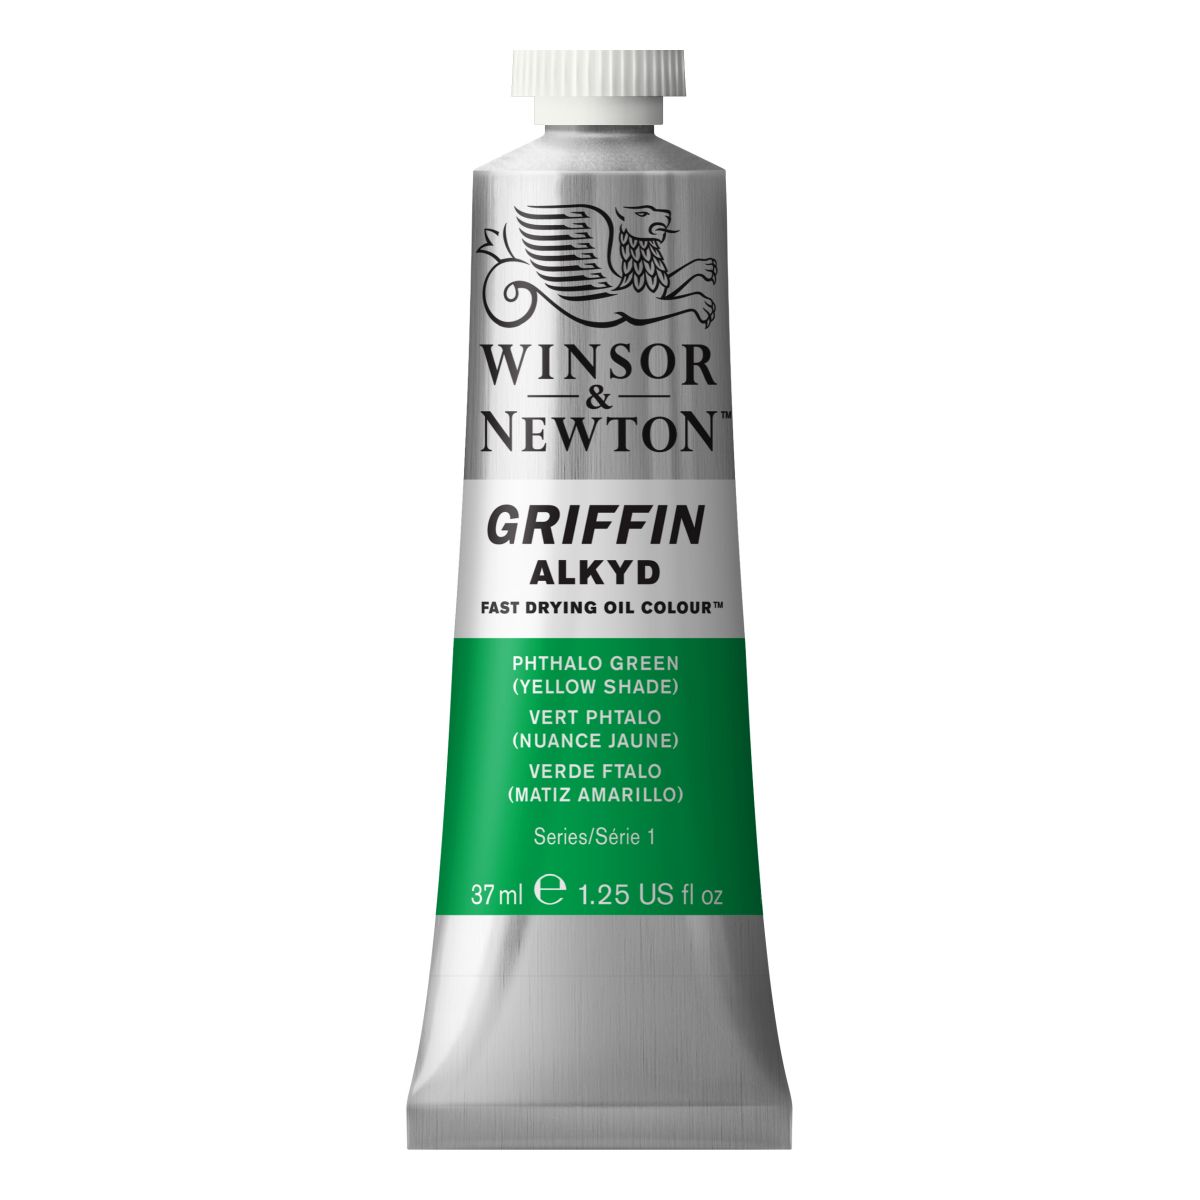 Winsor & Newton Griffin Alkyd Oil Paint